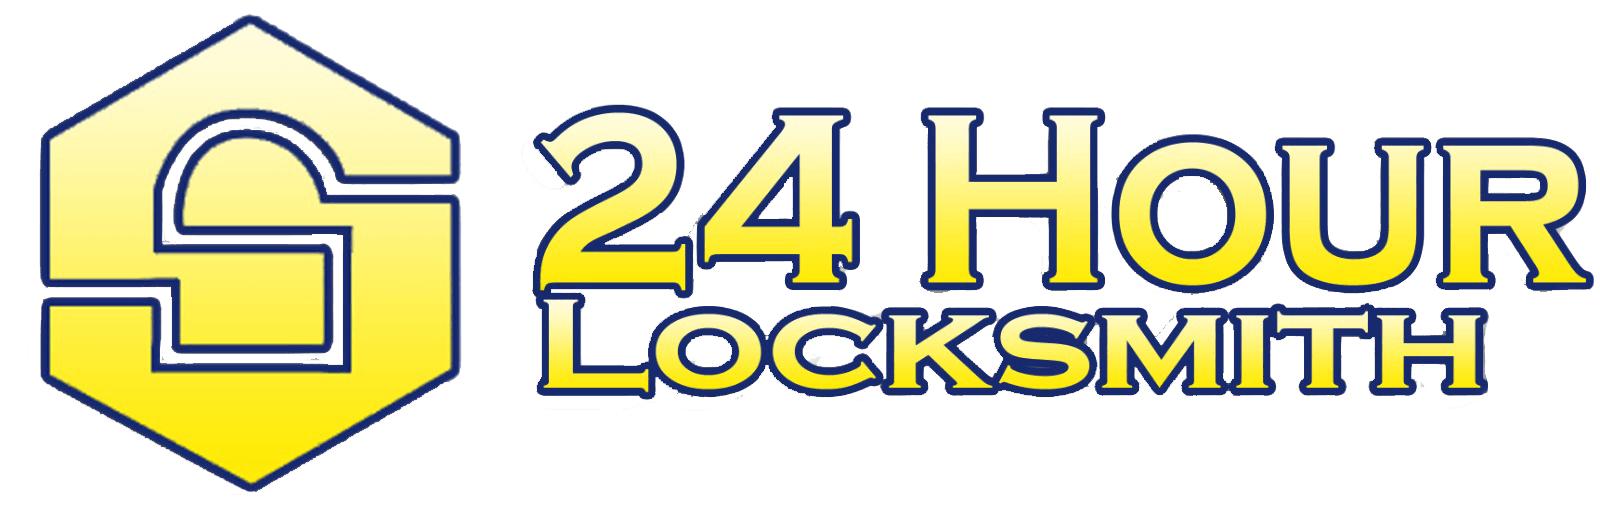 24 Hour Locksmith in Laredo, TX